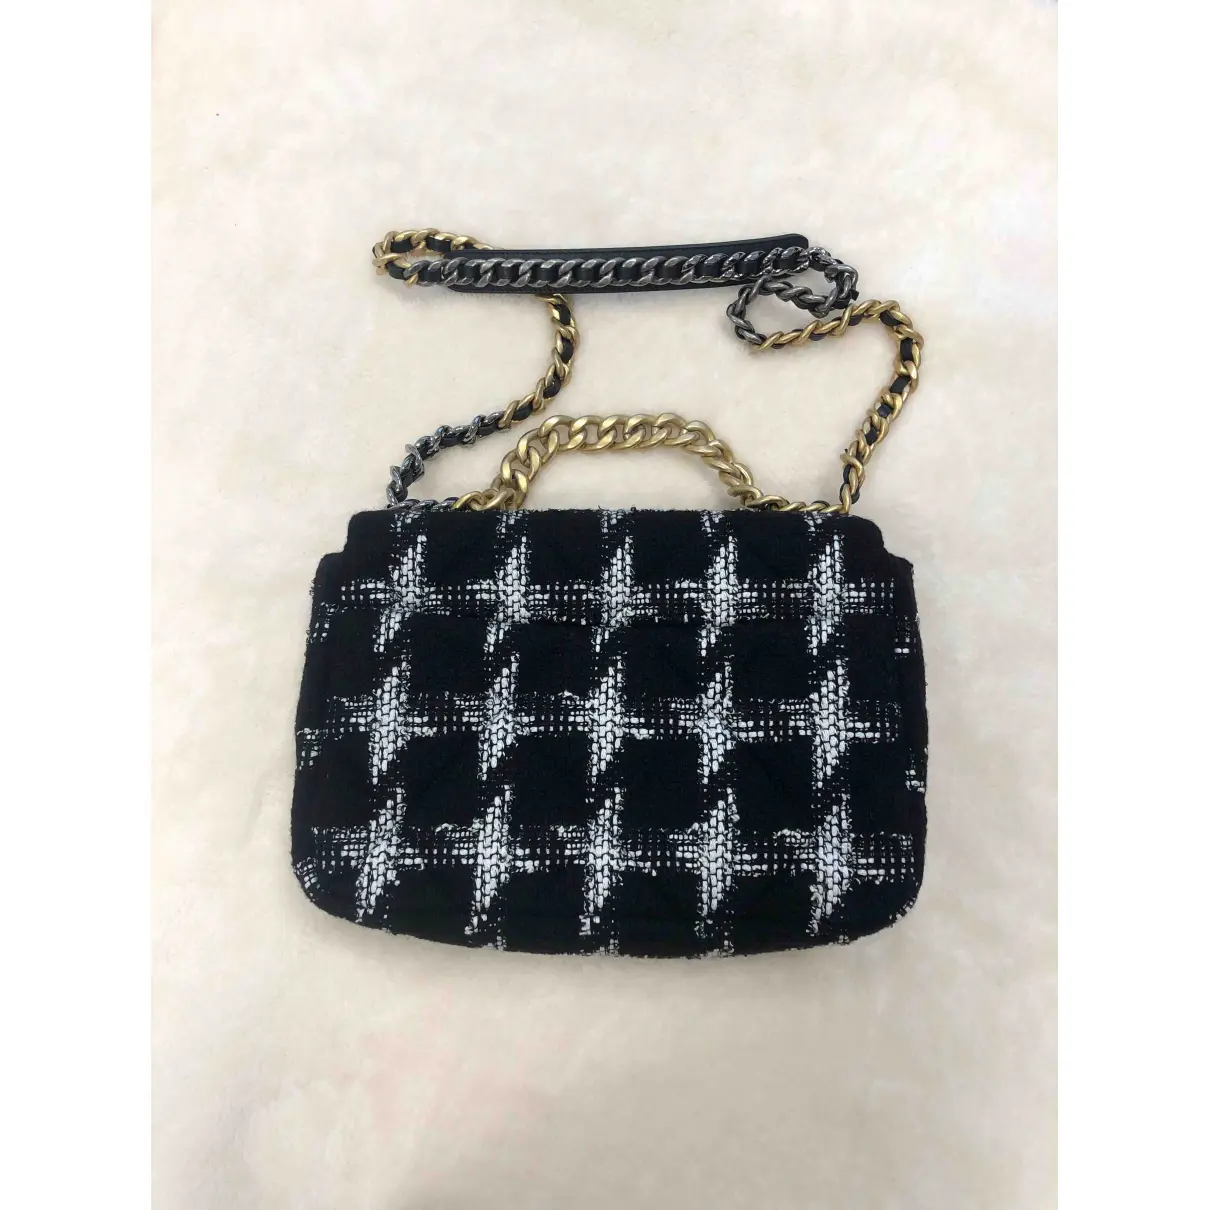 Buy Chanel Chanel 19 tweed handbag online